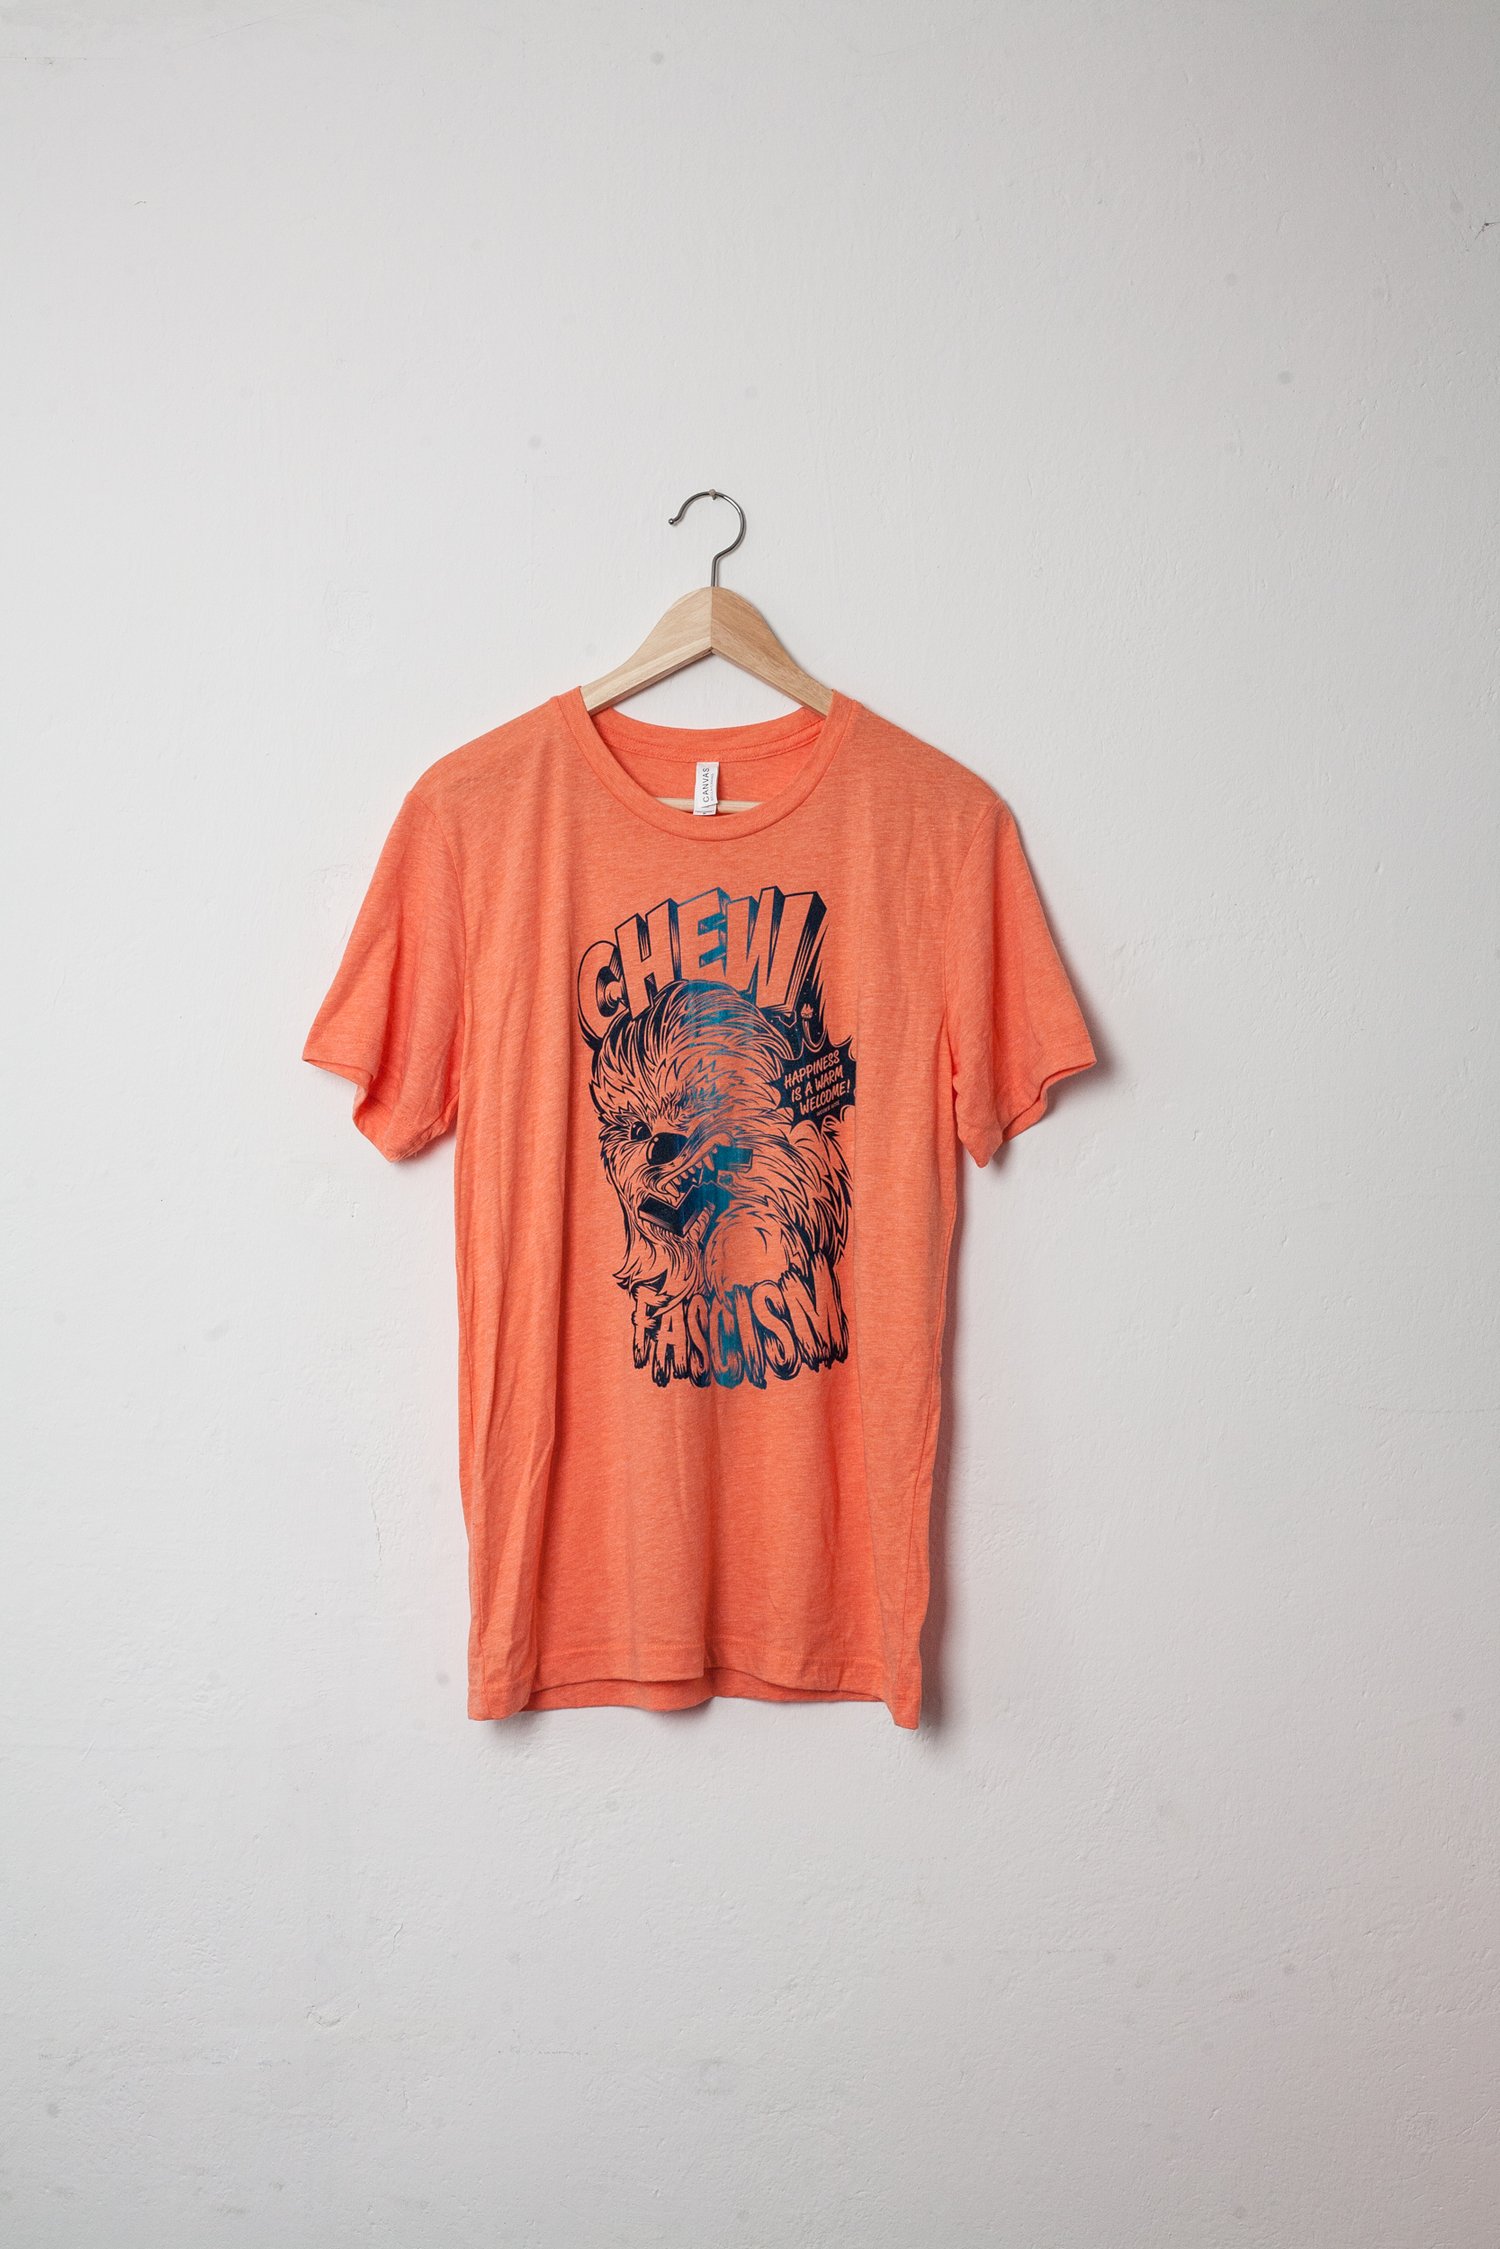 Image of T-Shirt CHEW FASCISM Orange Coloursplash